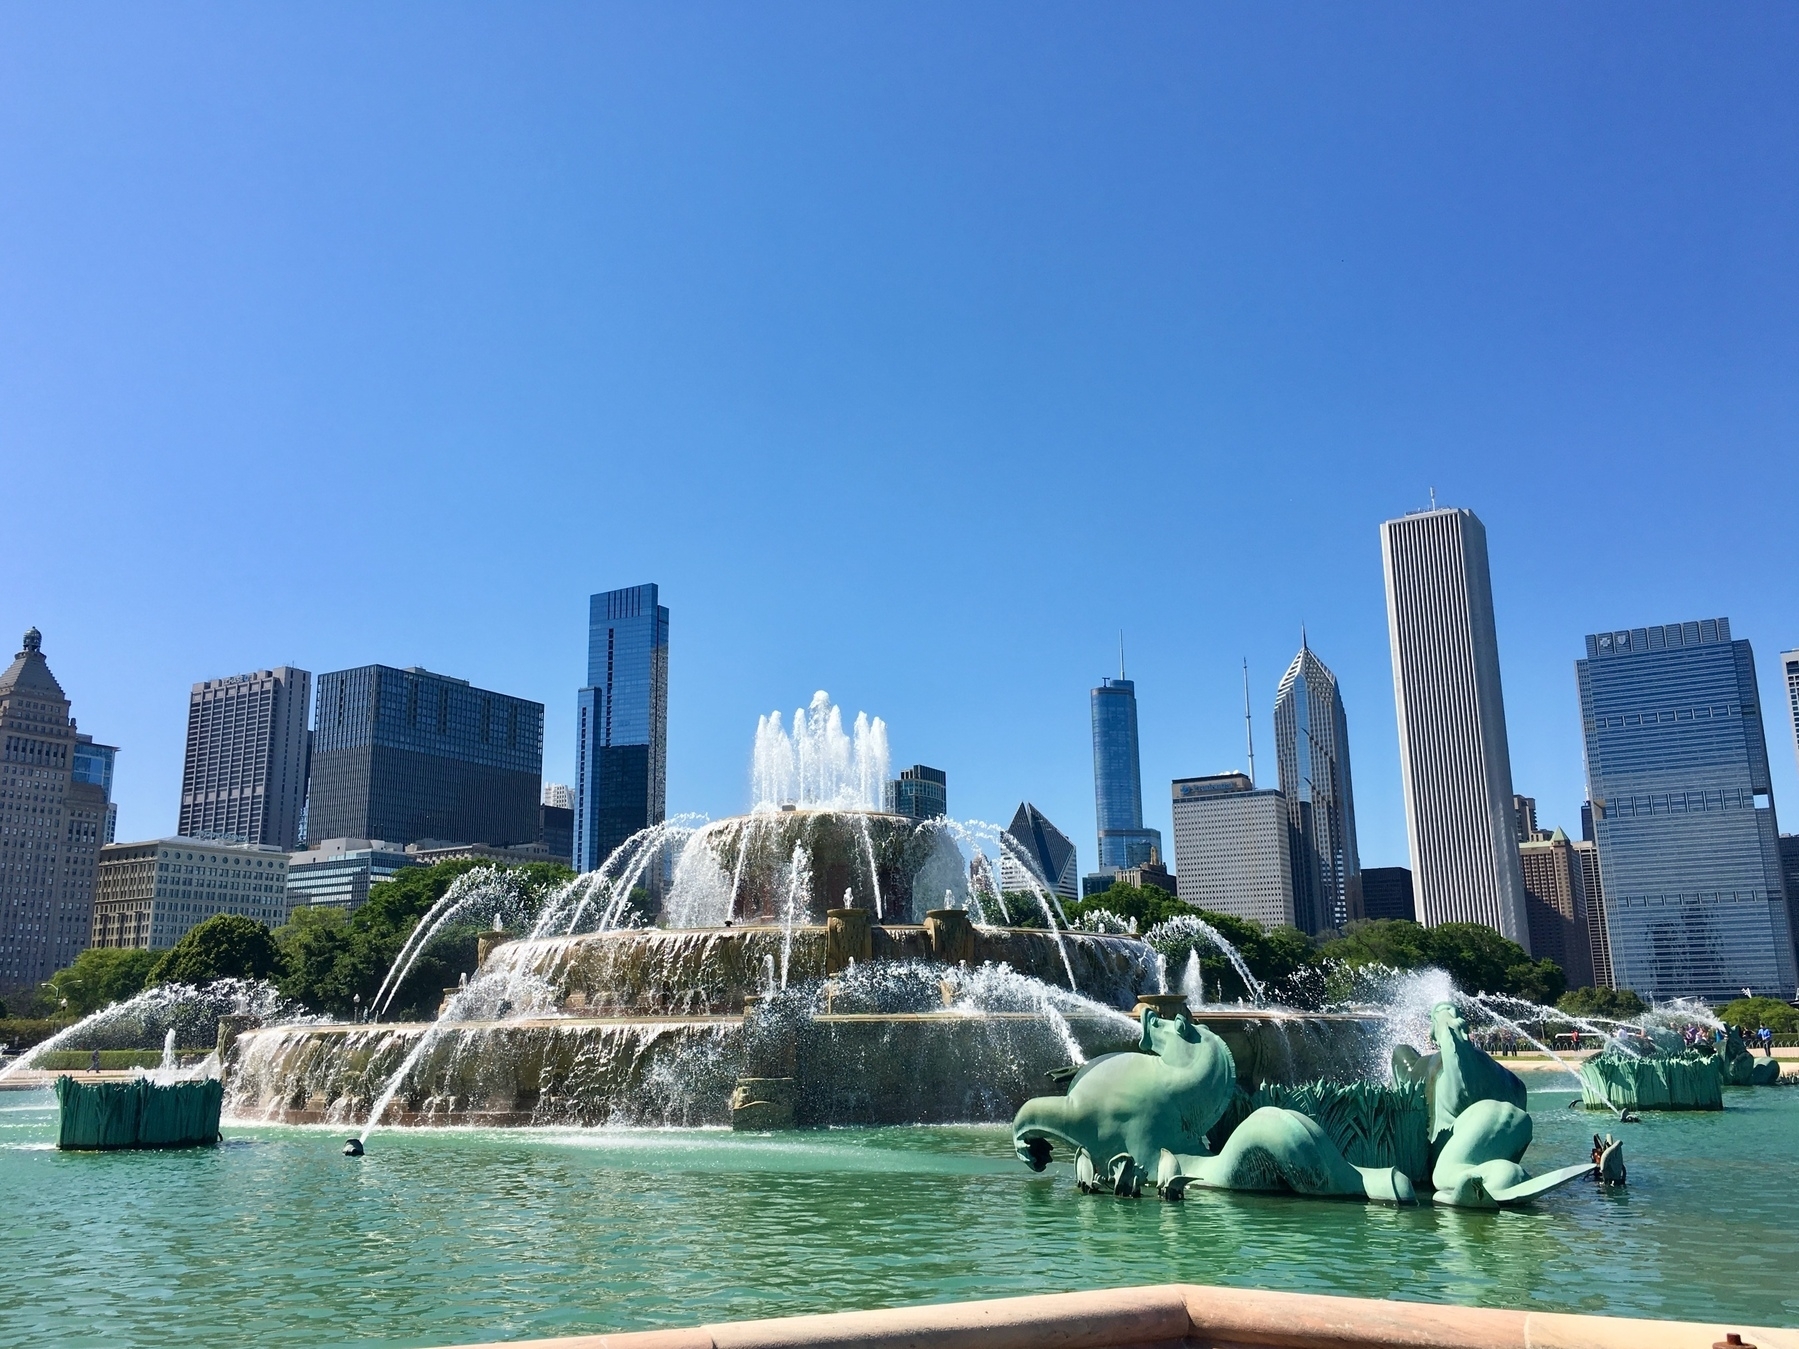 Buckingham fountain and Chicago skyline under a clear, cloudless blue sky.